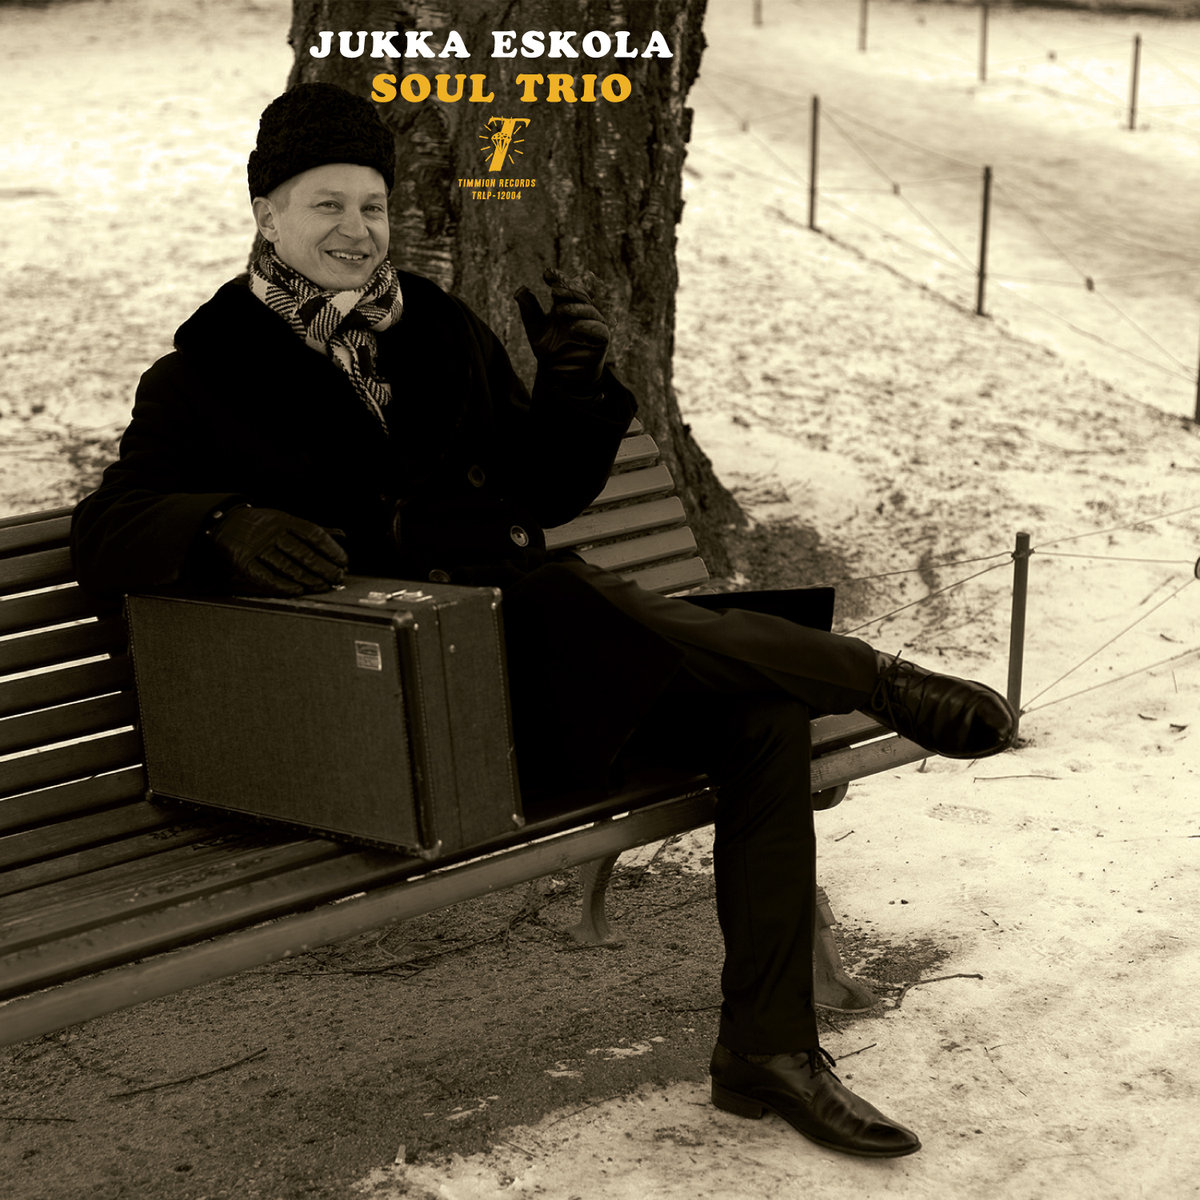 Jukka Eskola Soul Trio